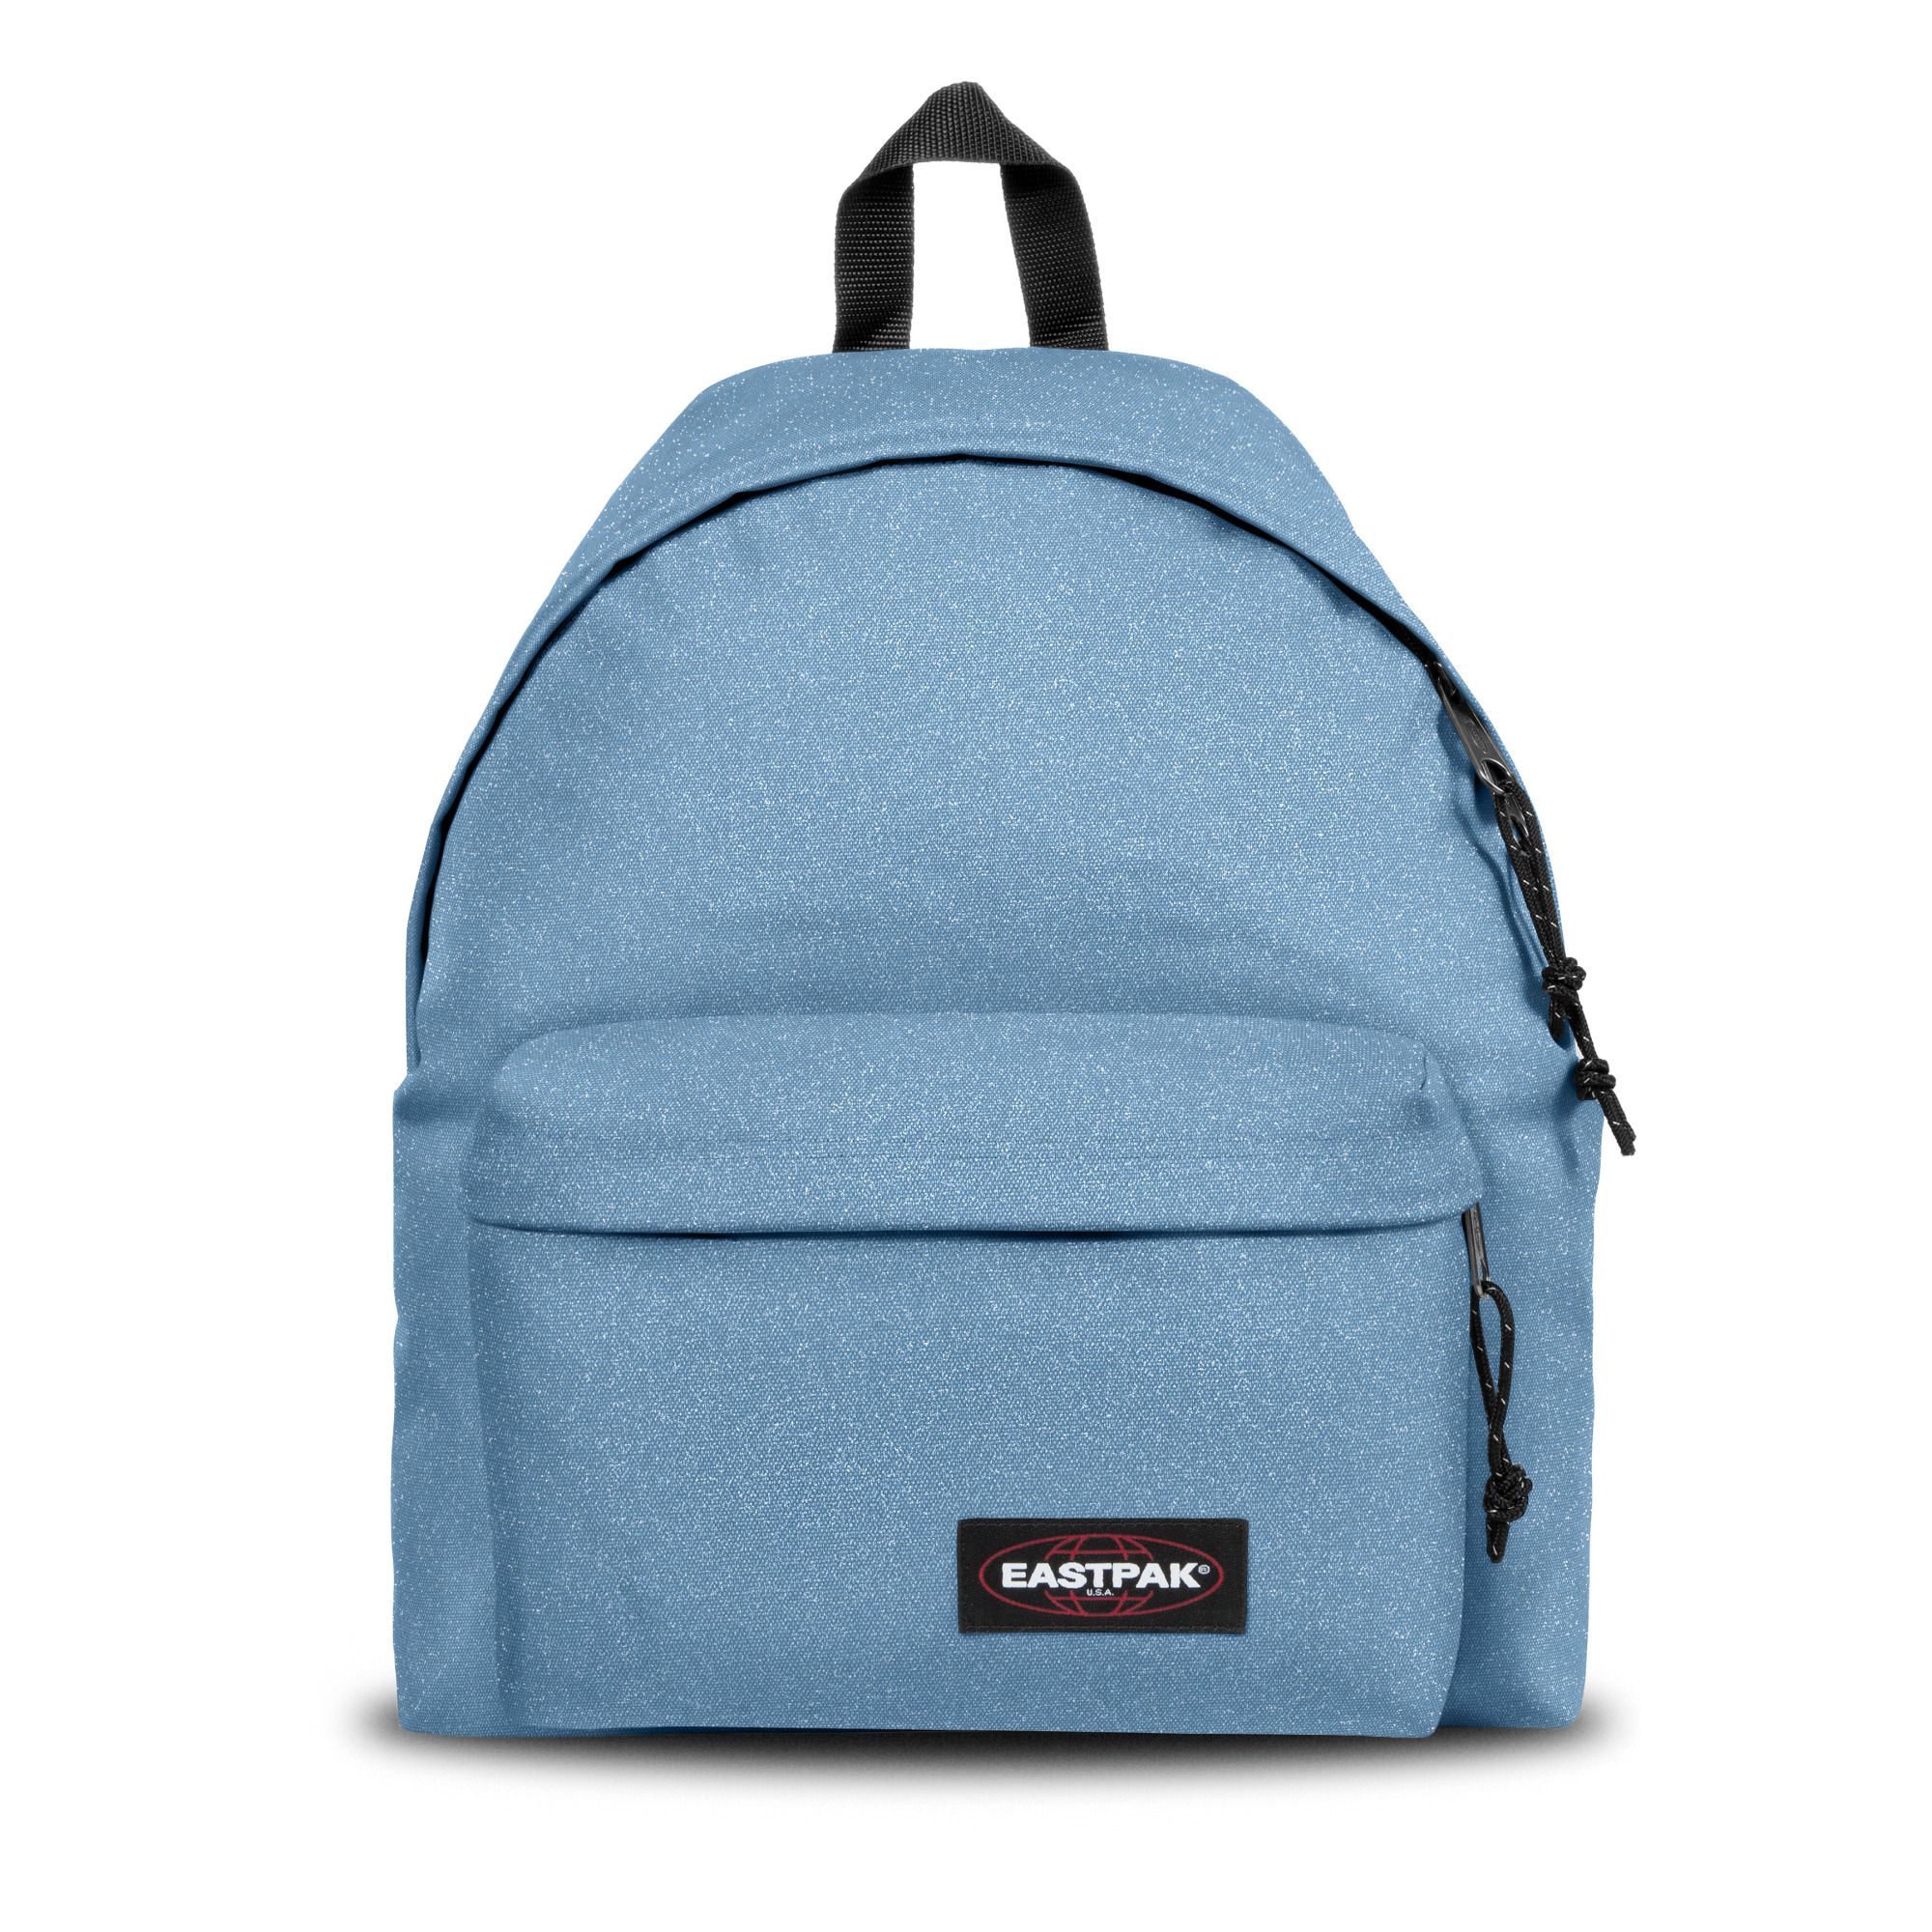 Rang Vergemakkelijken Boekhouding Eastpak - Backpack - Light Blue | Smallable